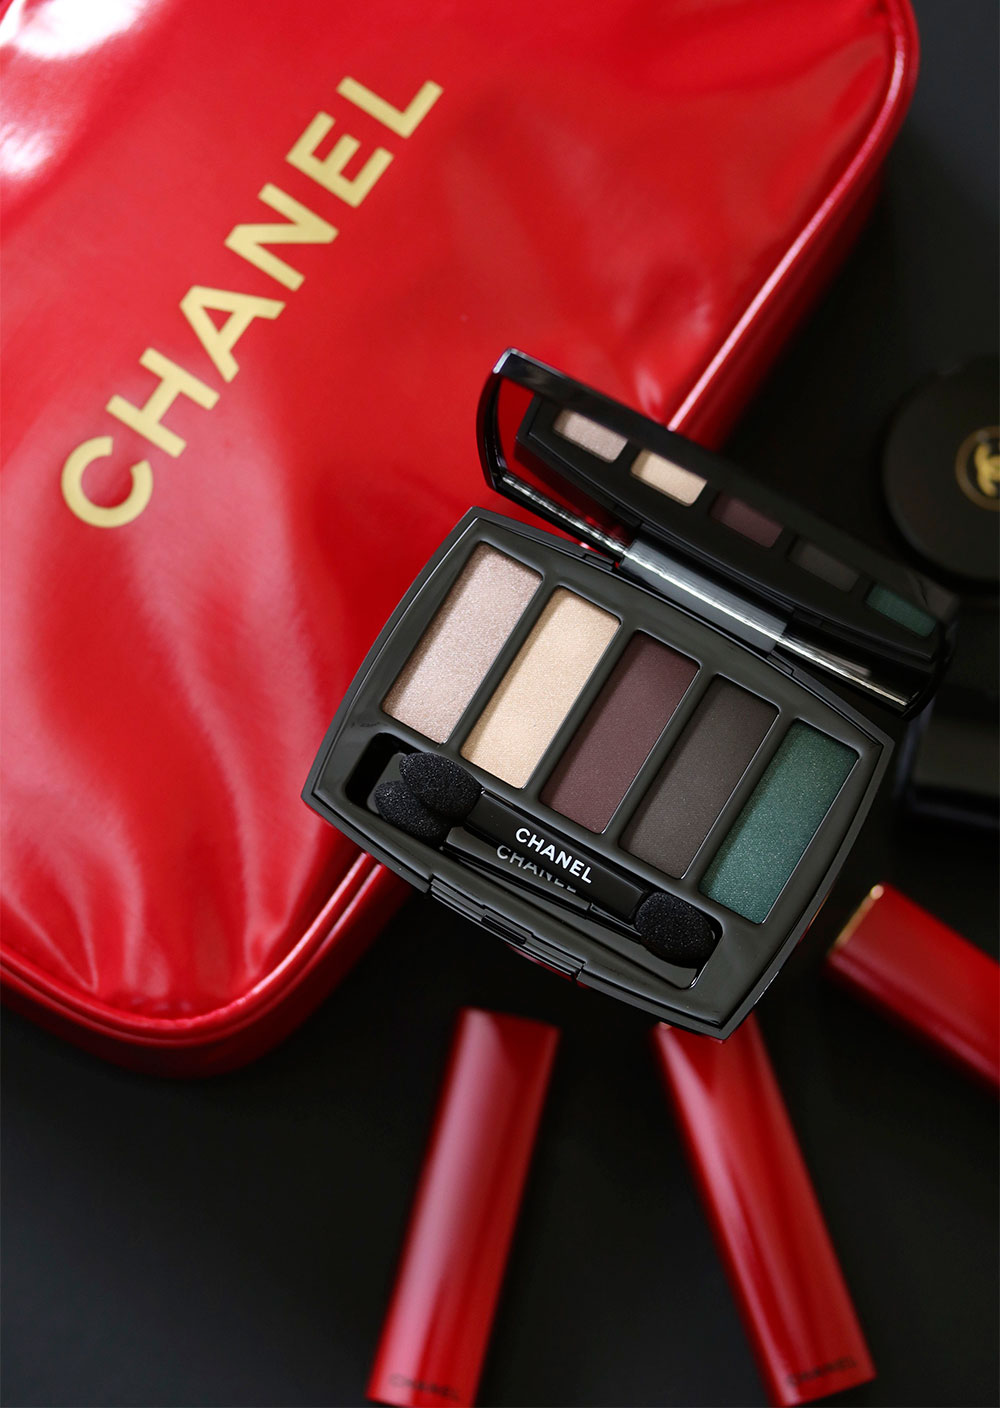 Chanel Trait de Caractère Eyeshadow Palette, Beauty & Personal